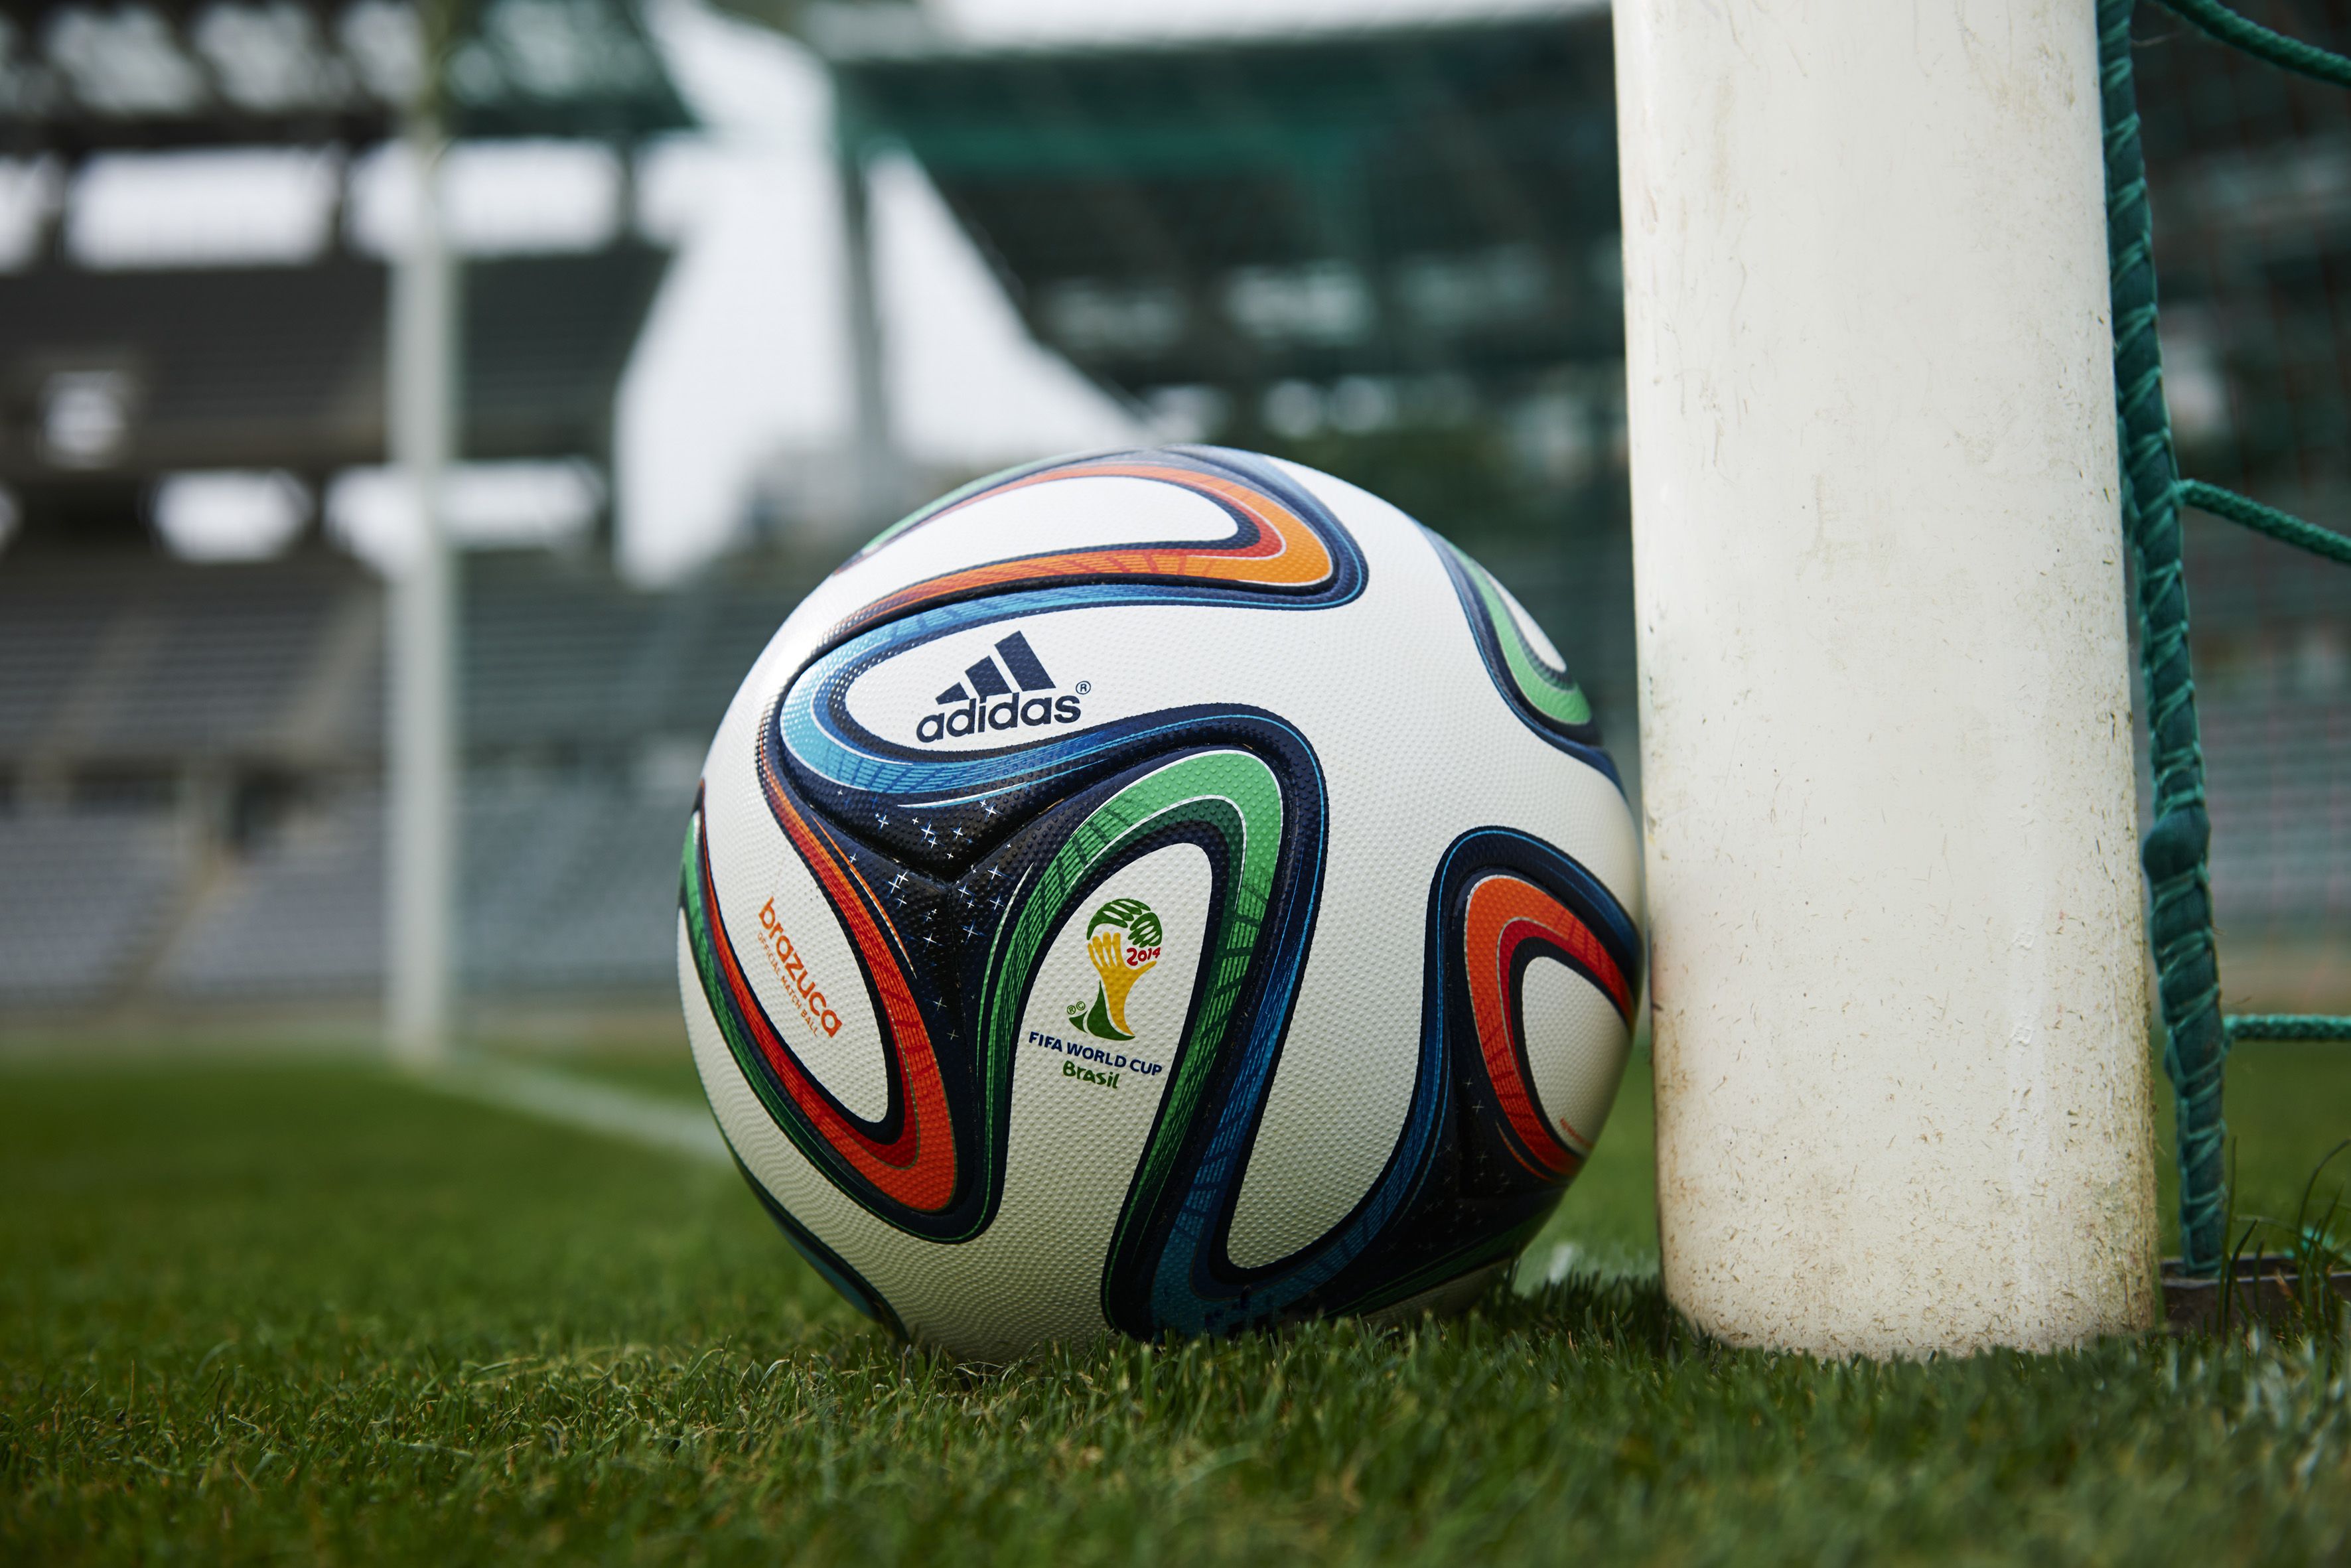 World Cup 2014: Testing the Brazuca ball - BBC News